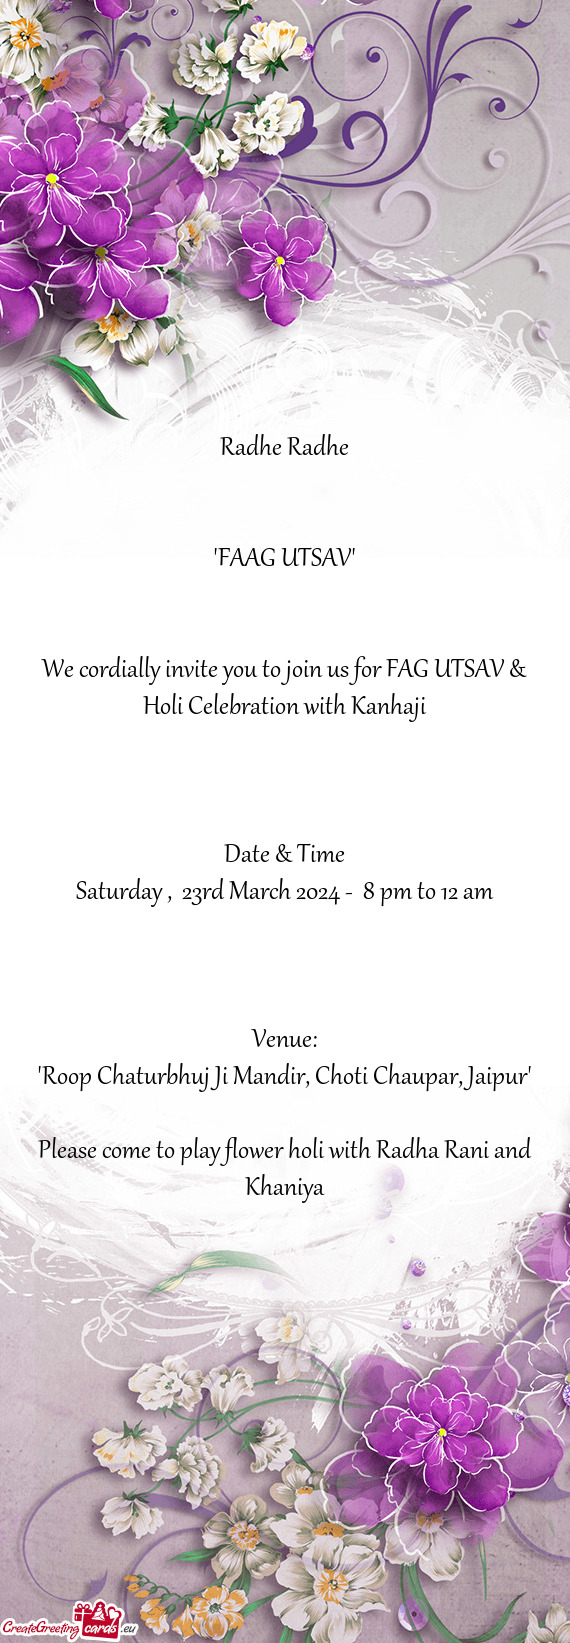 We cordially invite you to join us for FAG UTSAV & Holi Celebration with Kanhaji